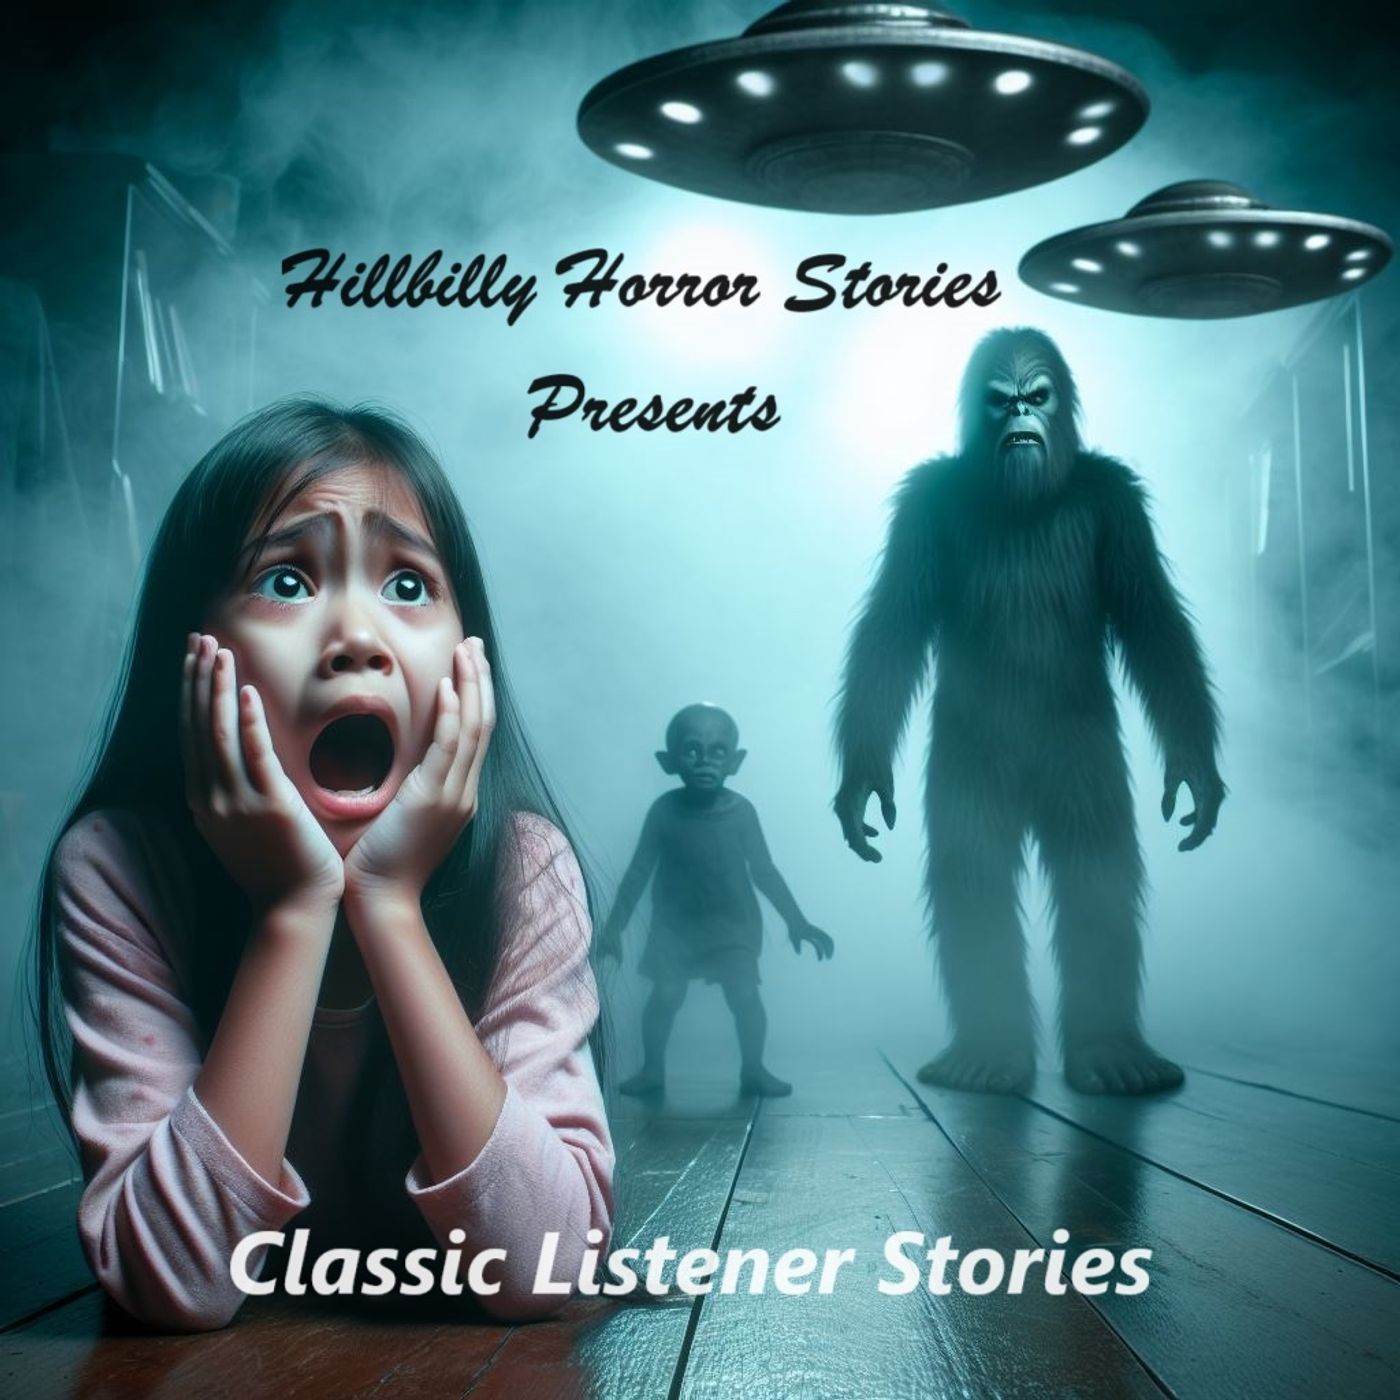 Ep 5 Classic Listener Stories